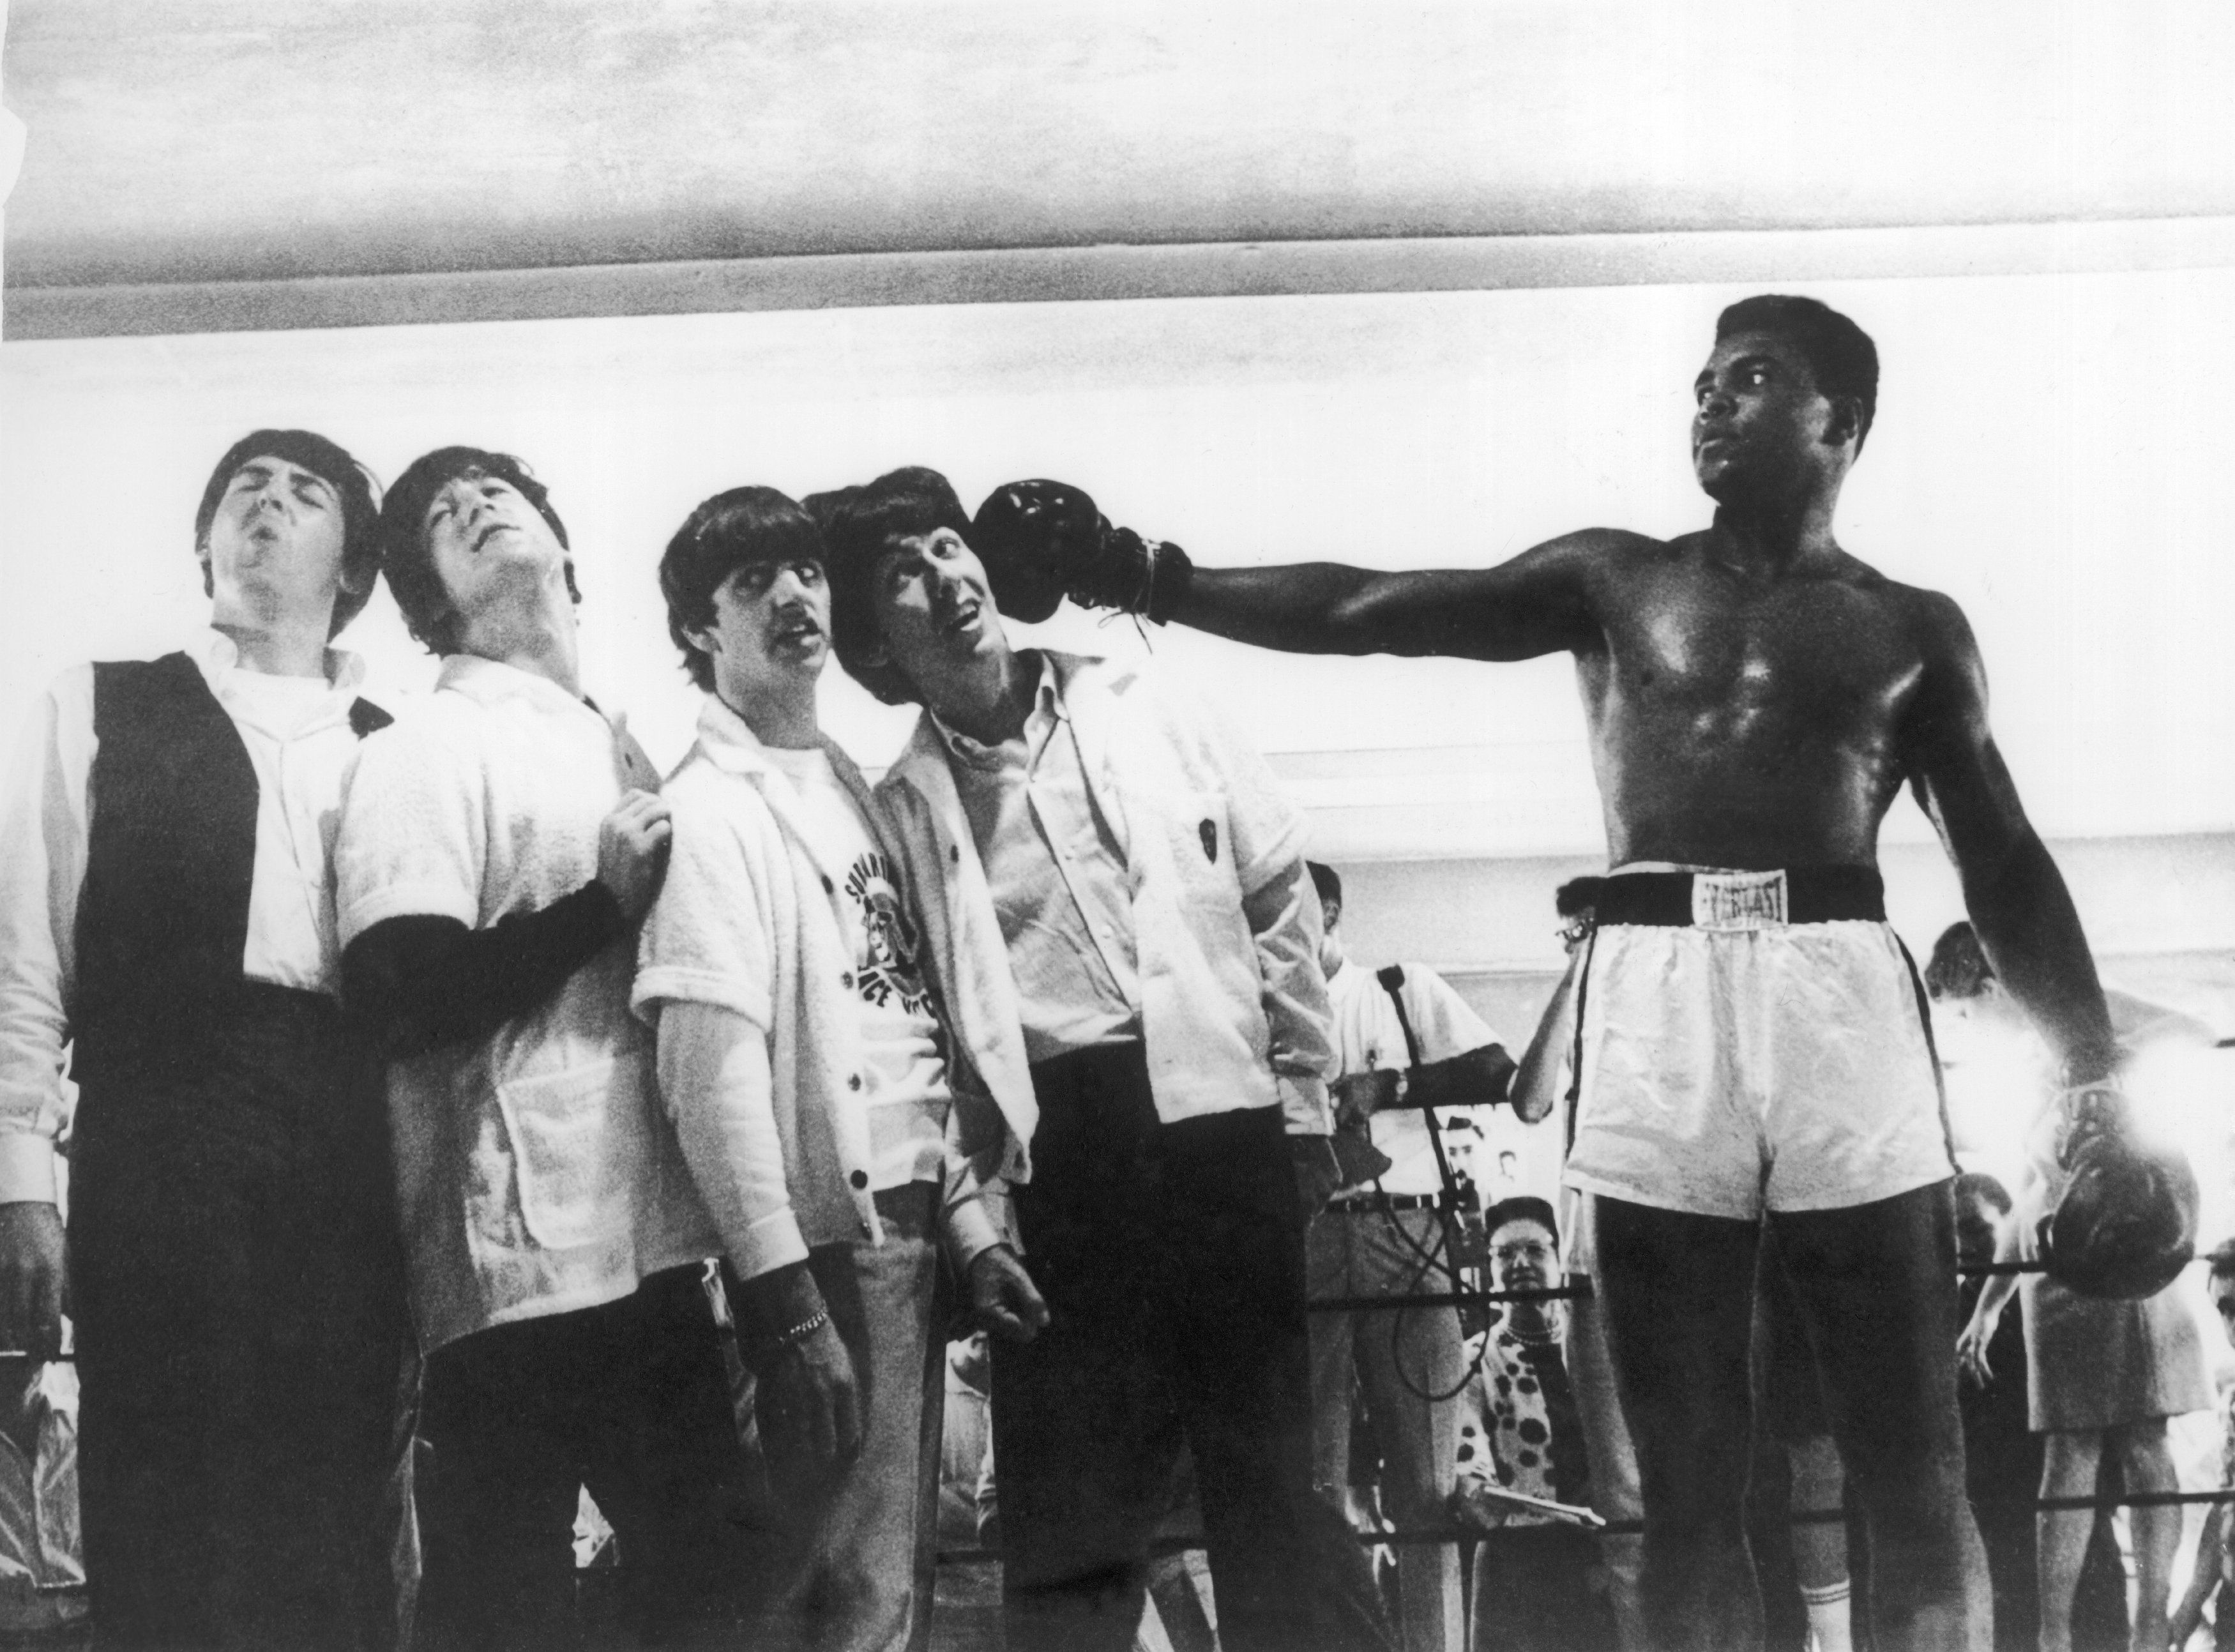 Muhammad Ali pretending to punch The Beatles' Paul McCartney, John Lennon, Ringo Starr, and George Harrison